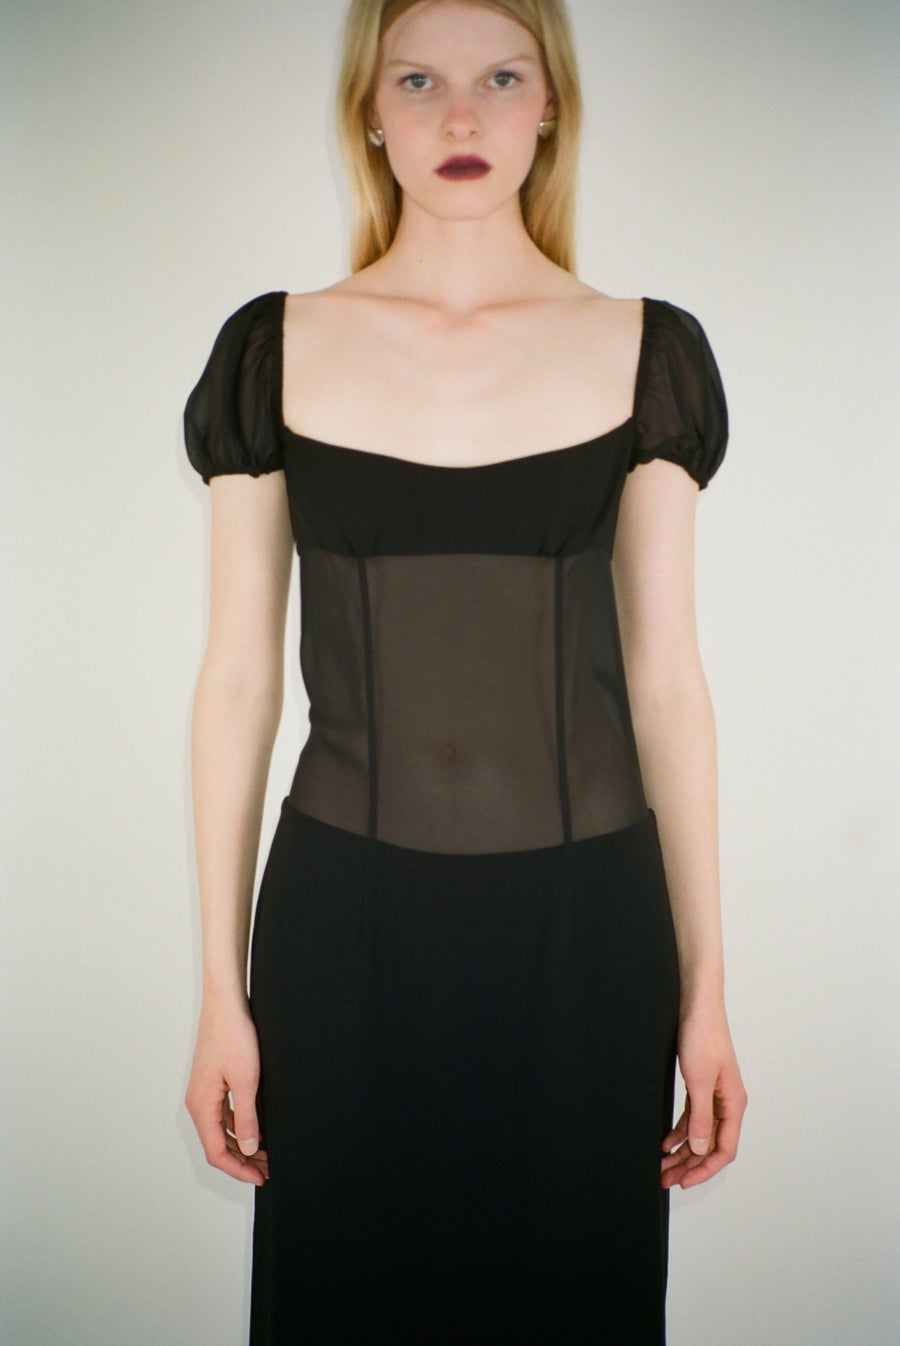 Midi length dress in black with sheer bodice on model